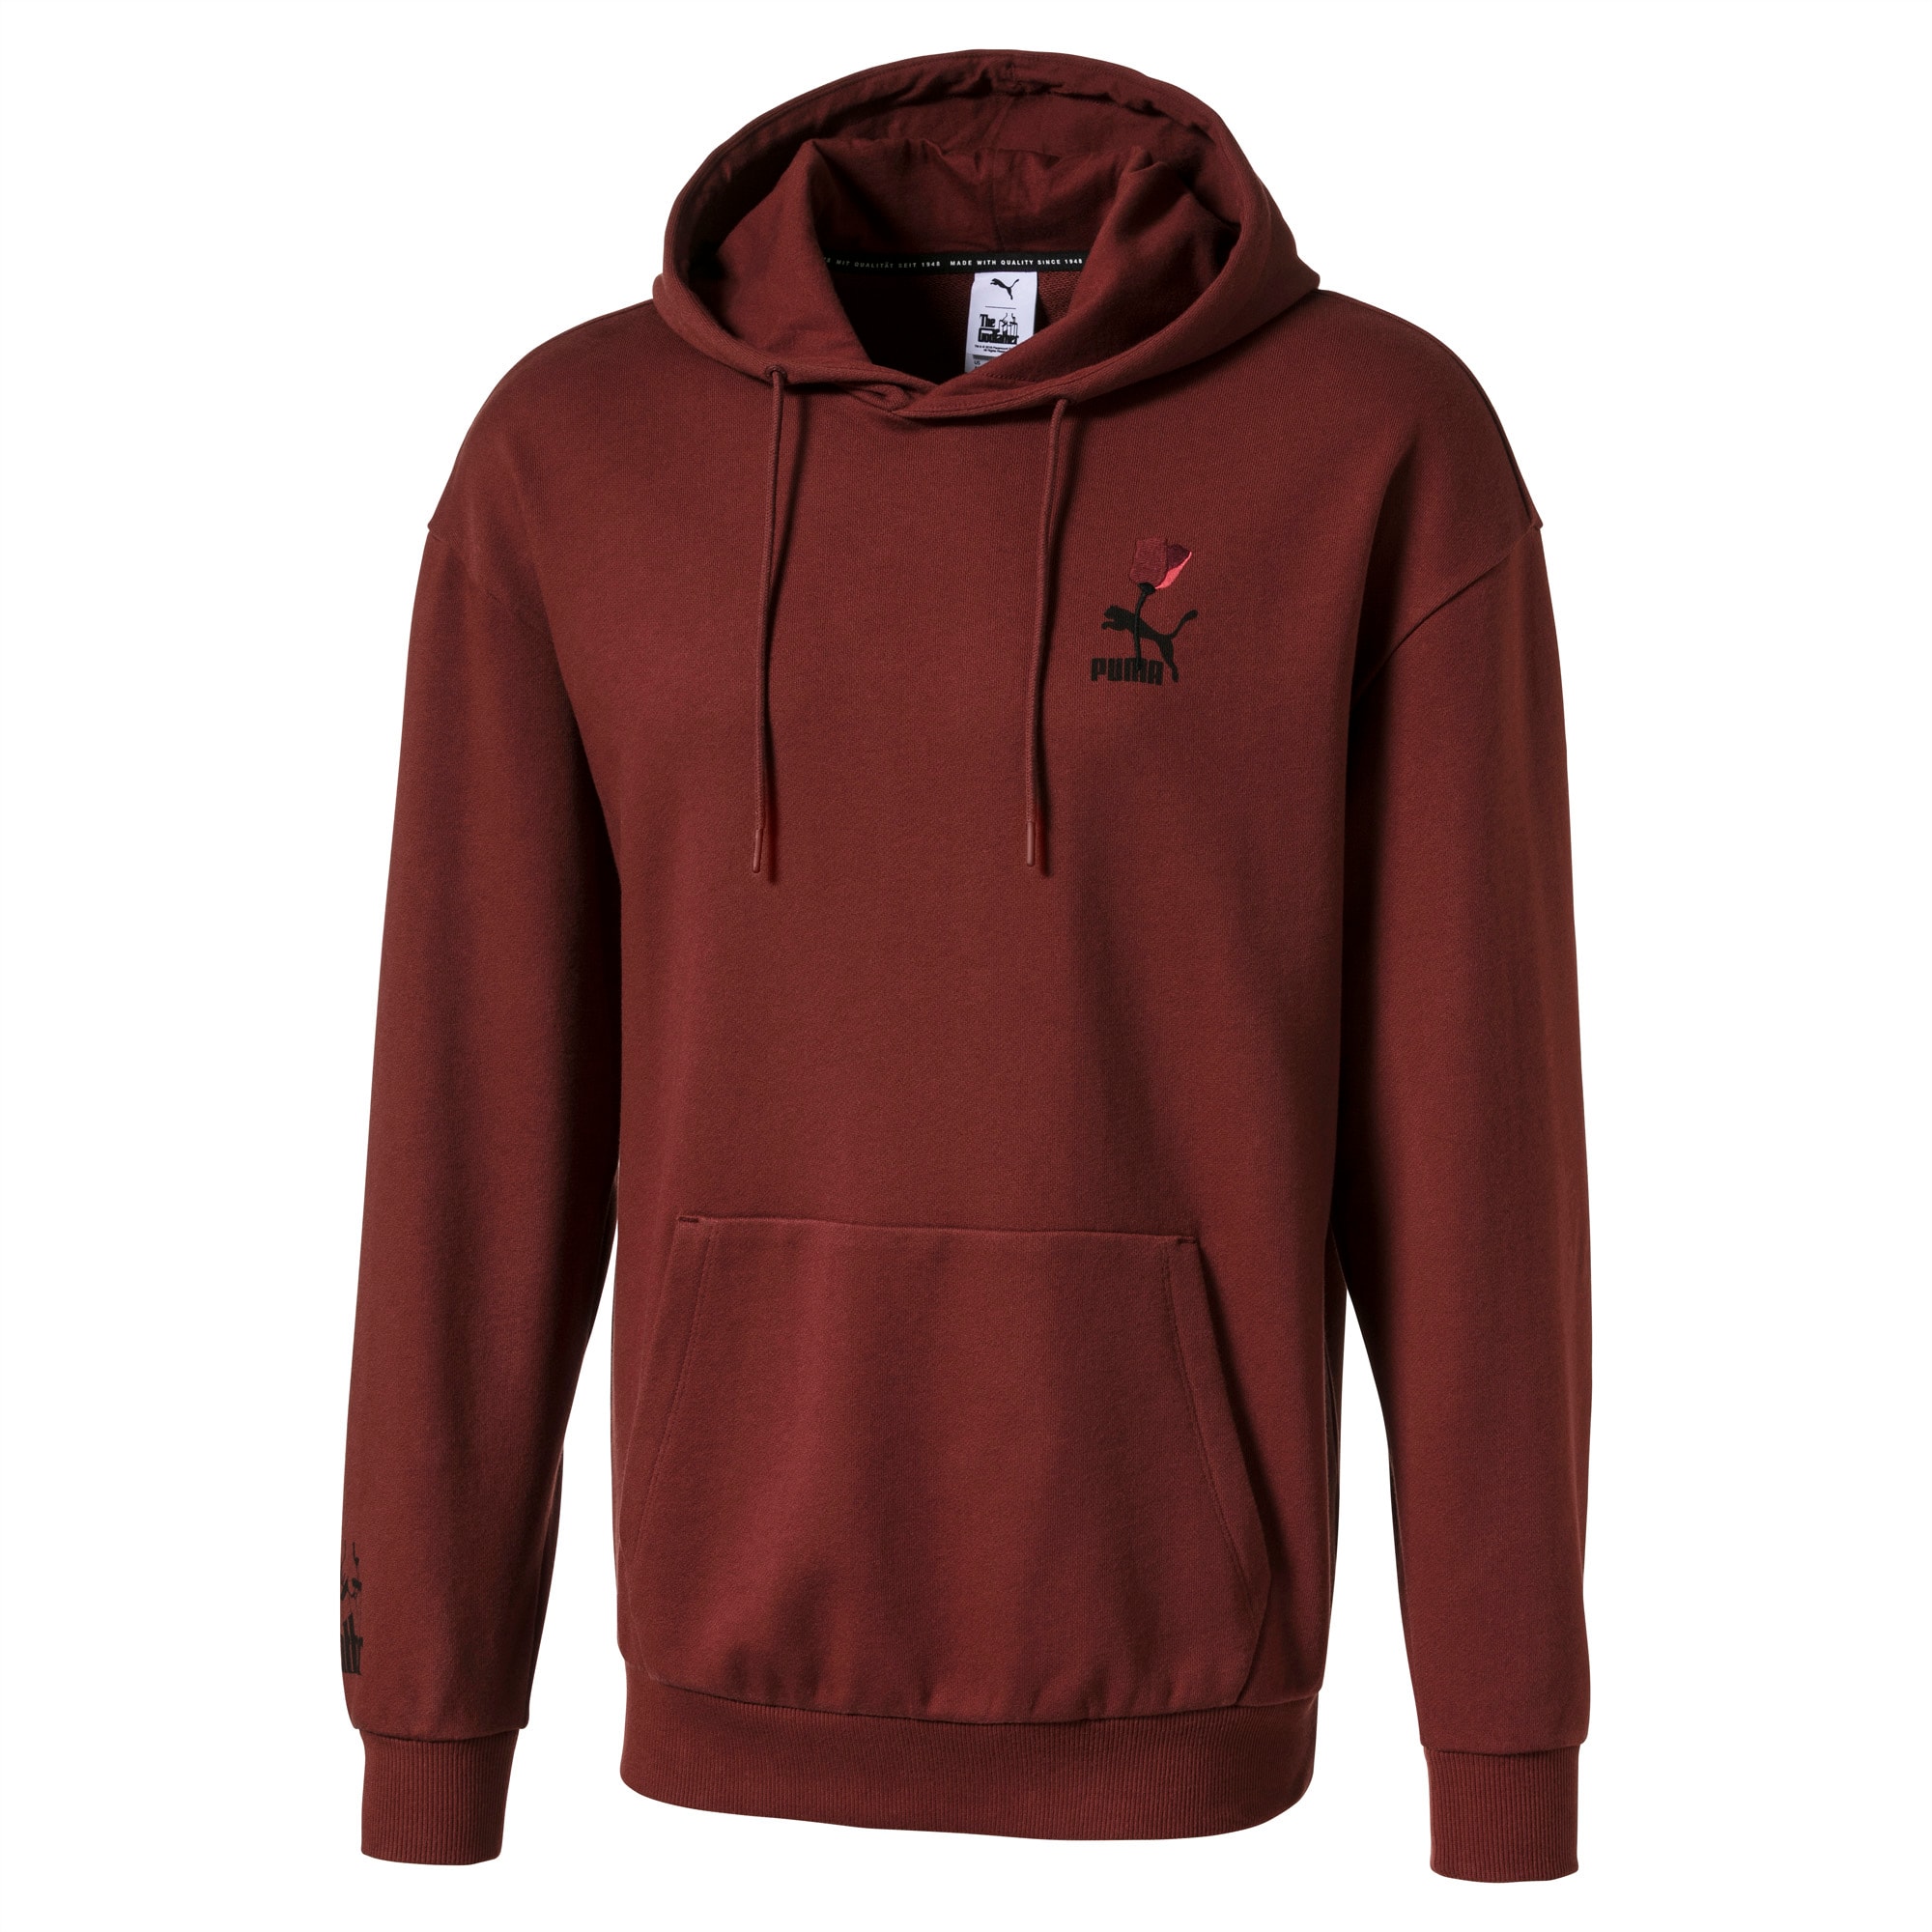 puma since 1948 hoodie